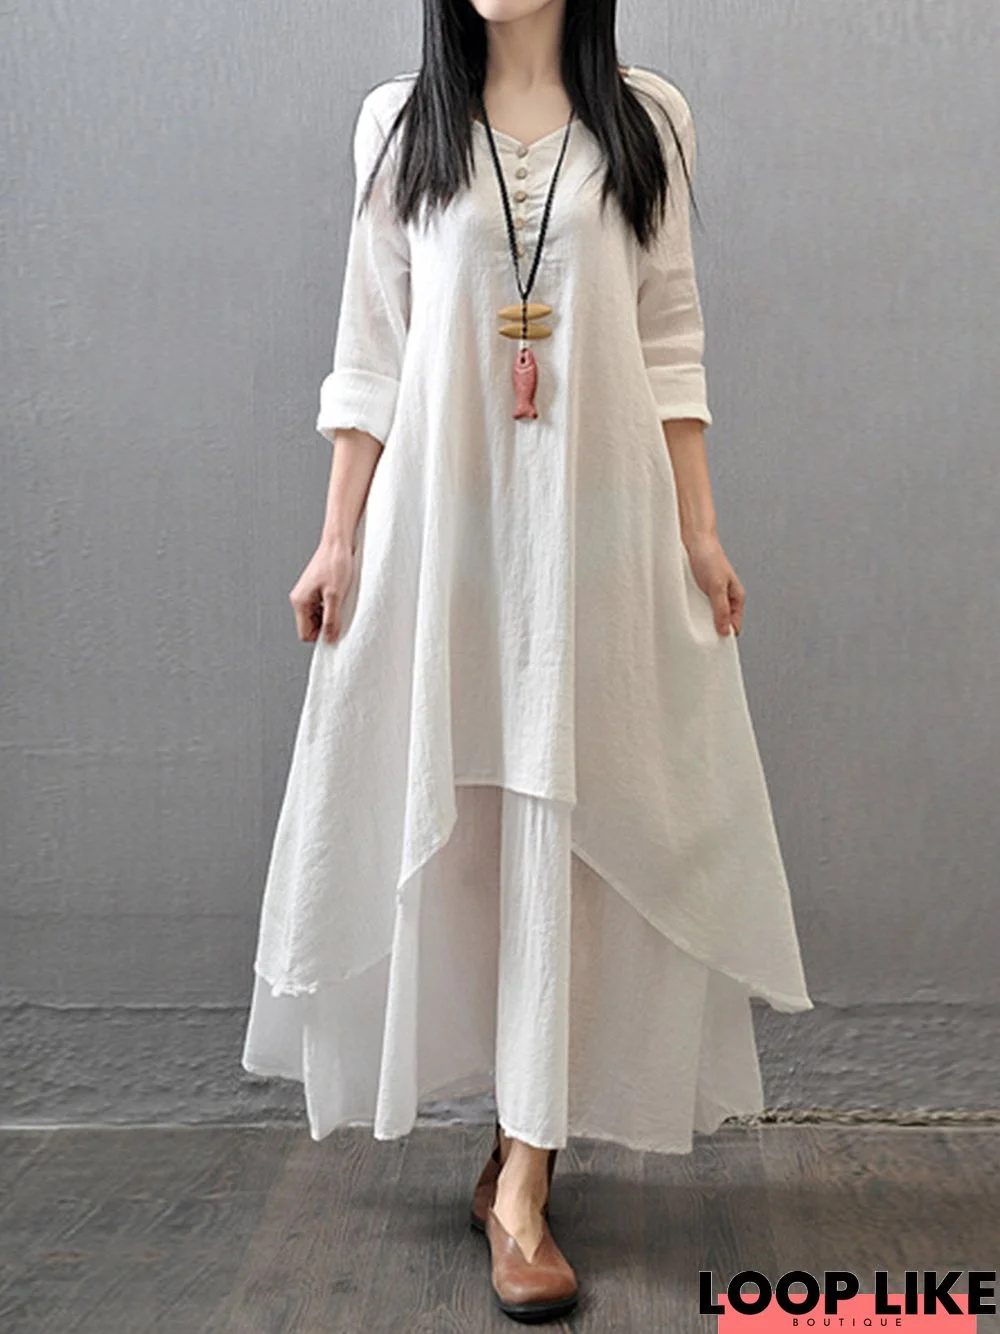 Plus Size Women Asymmetrical Daily 3/4 Sleeve Casual Asymmetric Solid Dress White Dresses Linen